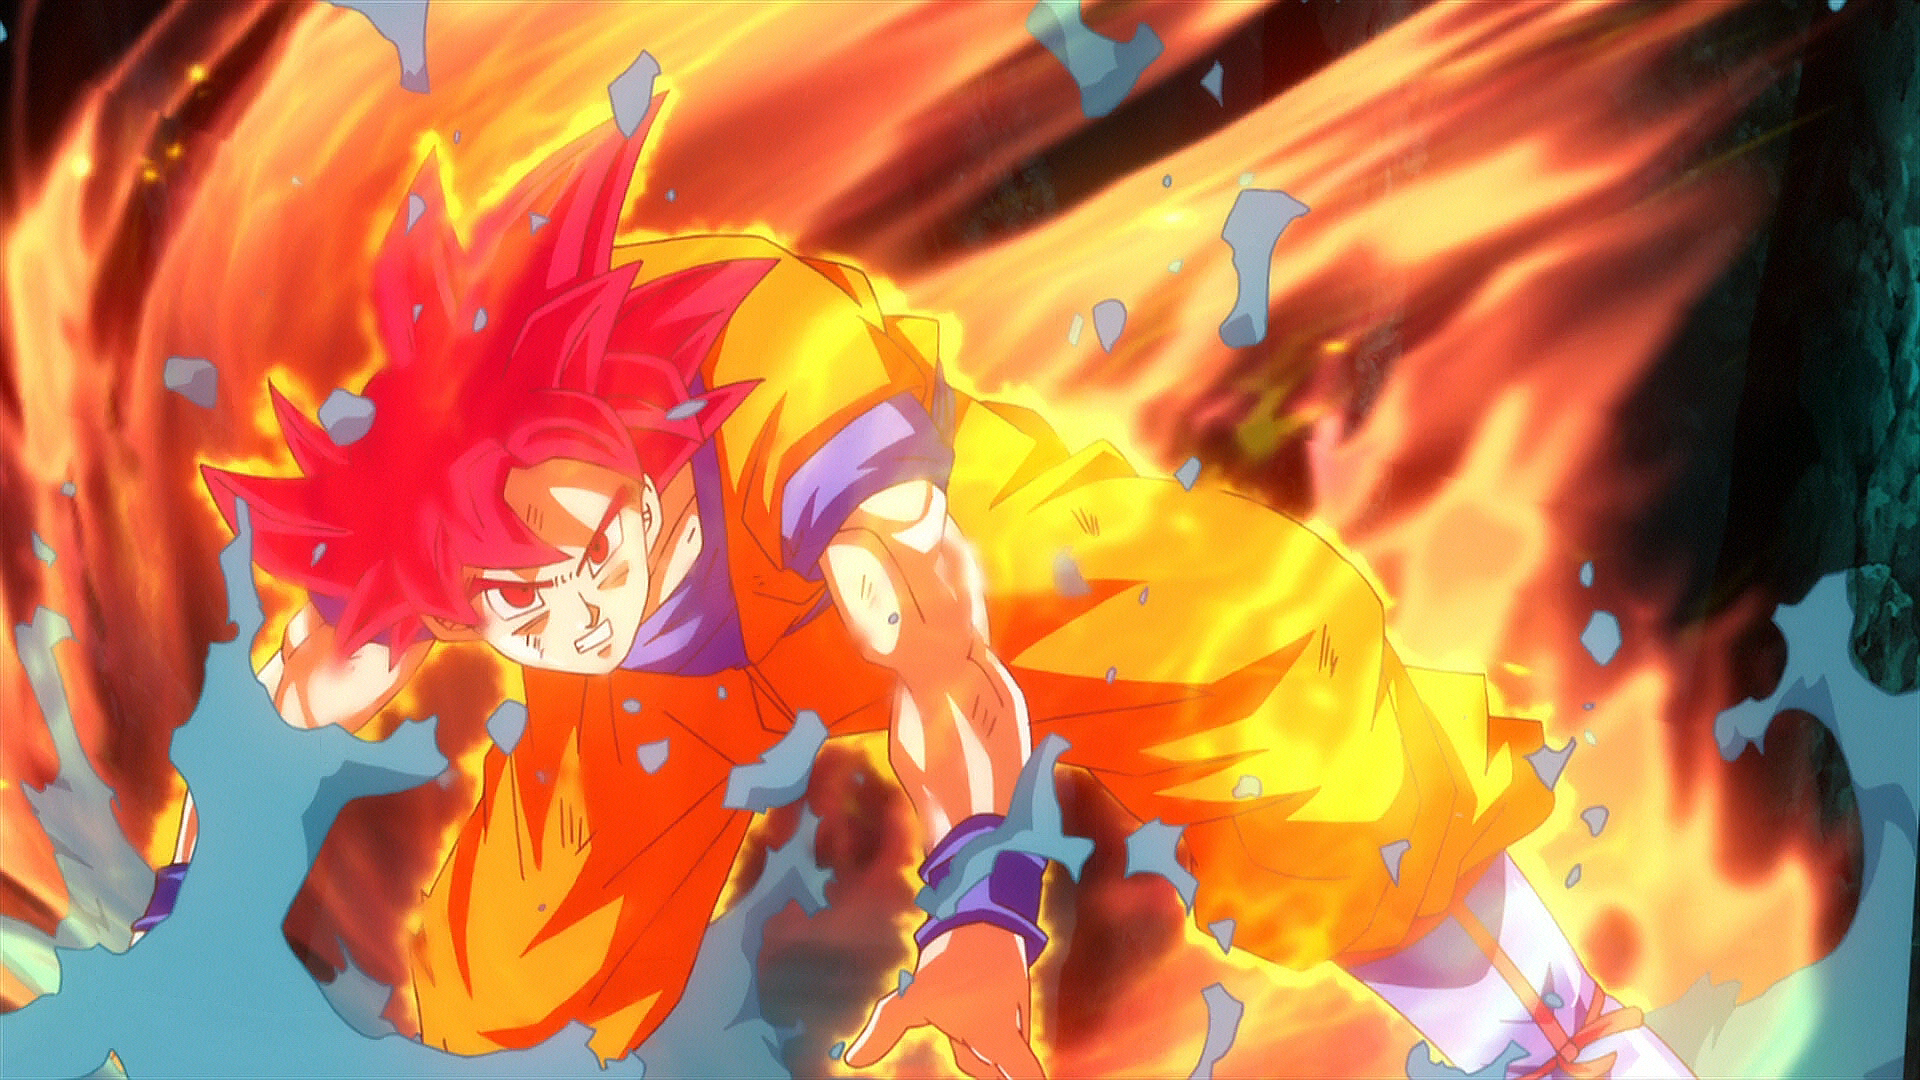 Dragon Ball Super Goku SSG